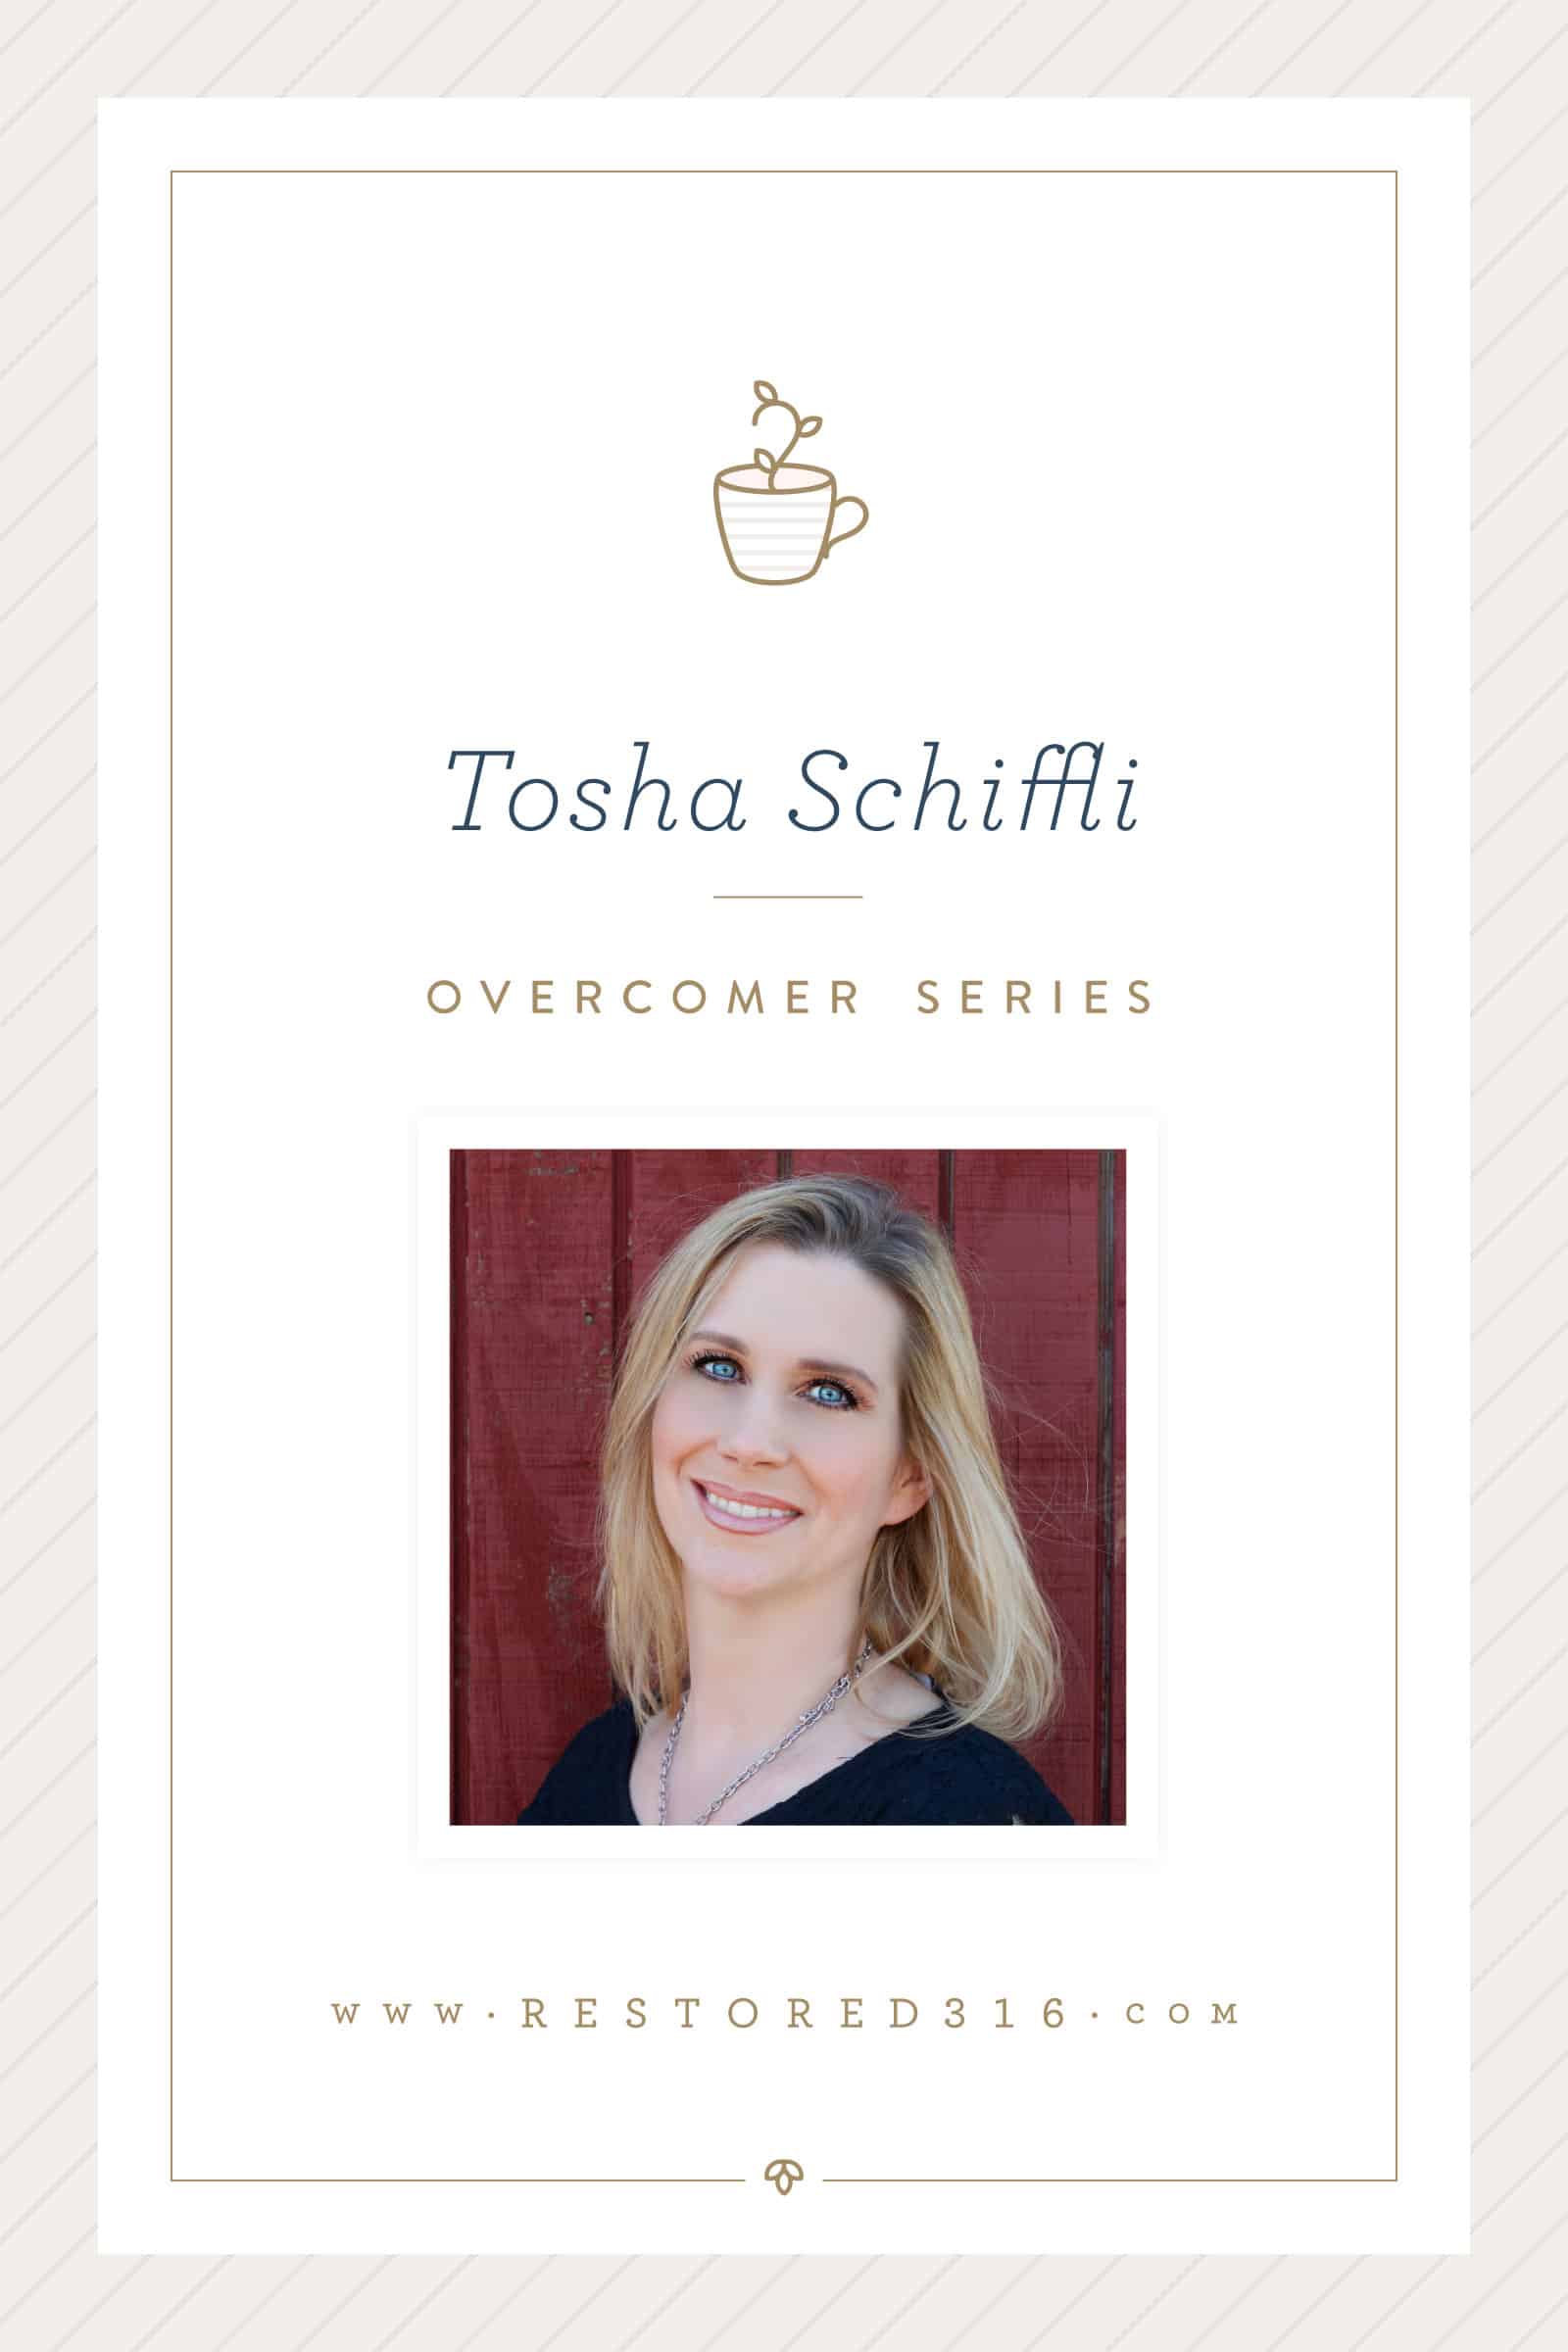 Overcomer Series with Tosha Schiffli